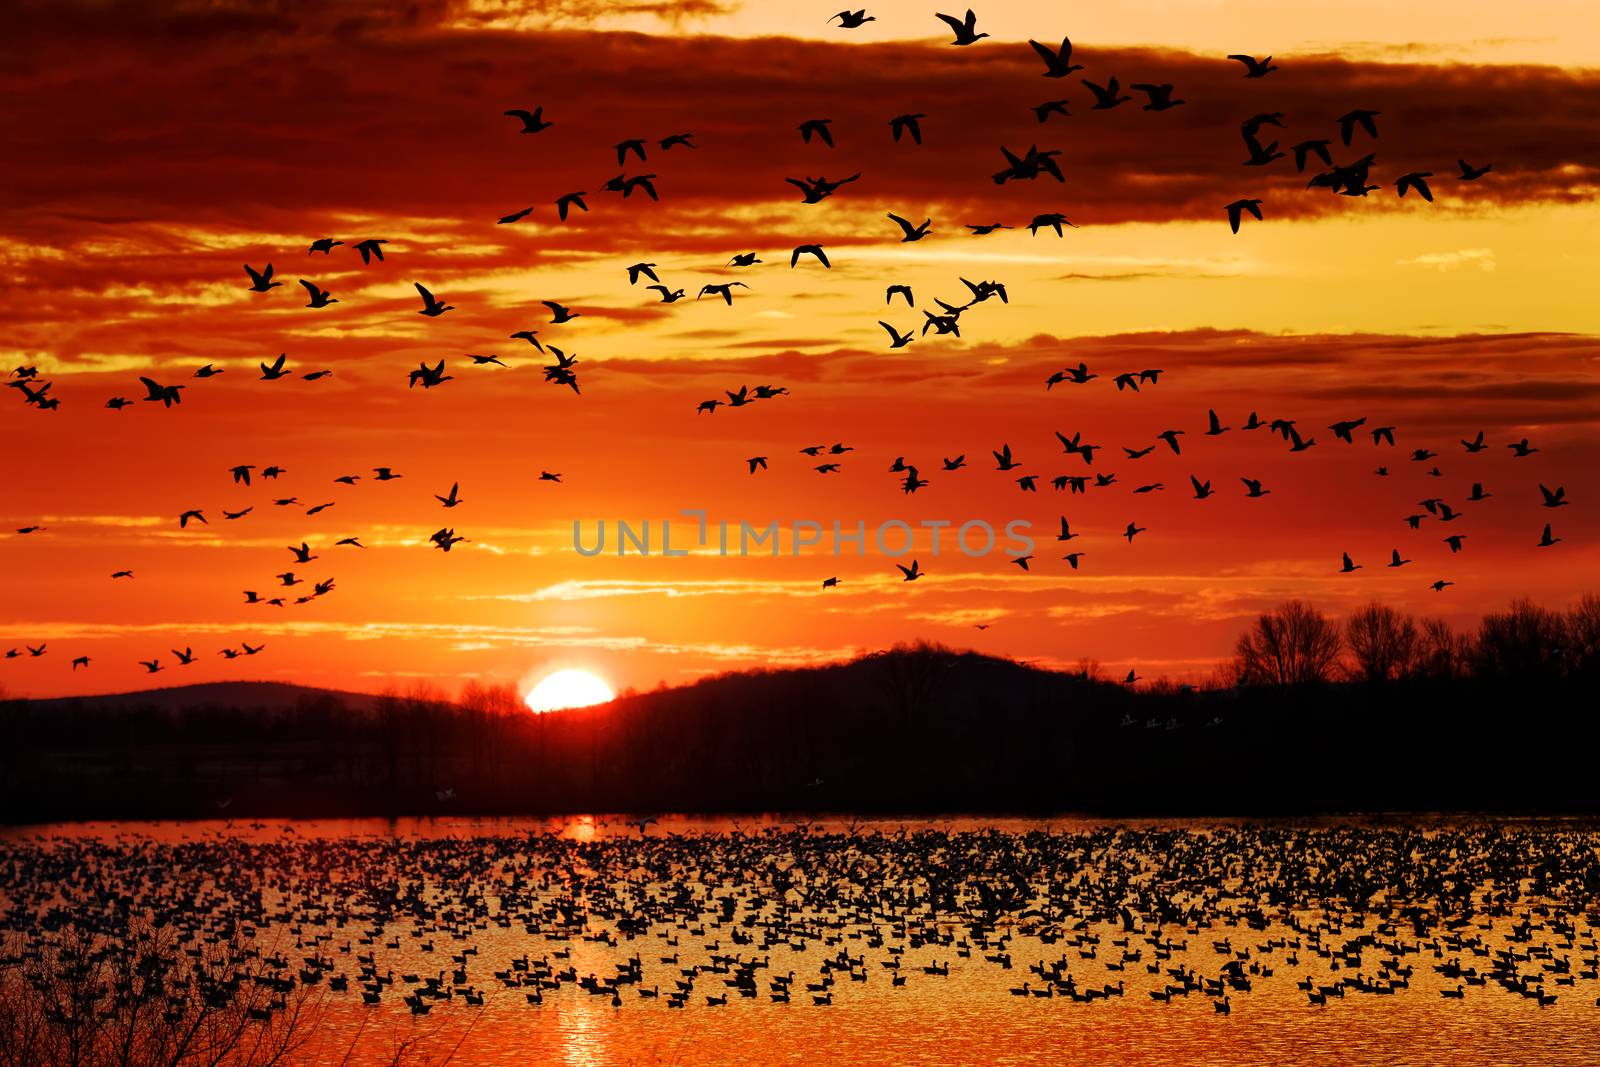 Snow Geese Take Flight at Sunrise by DelmasLehman